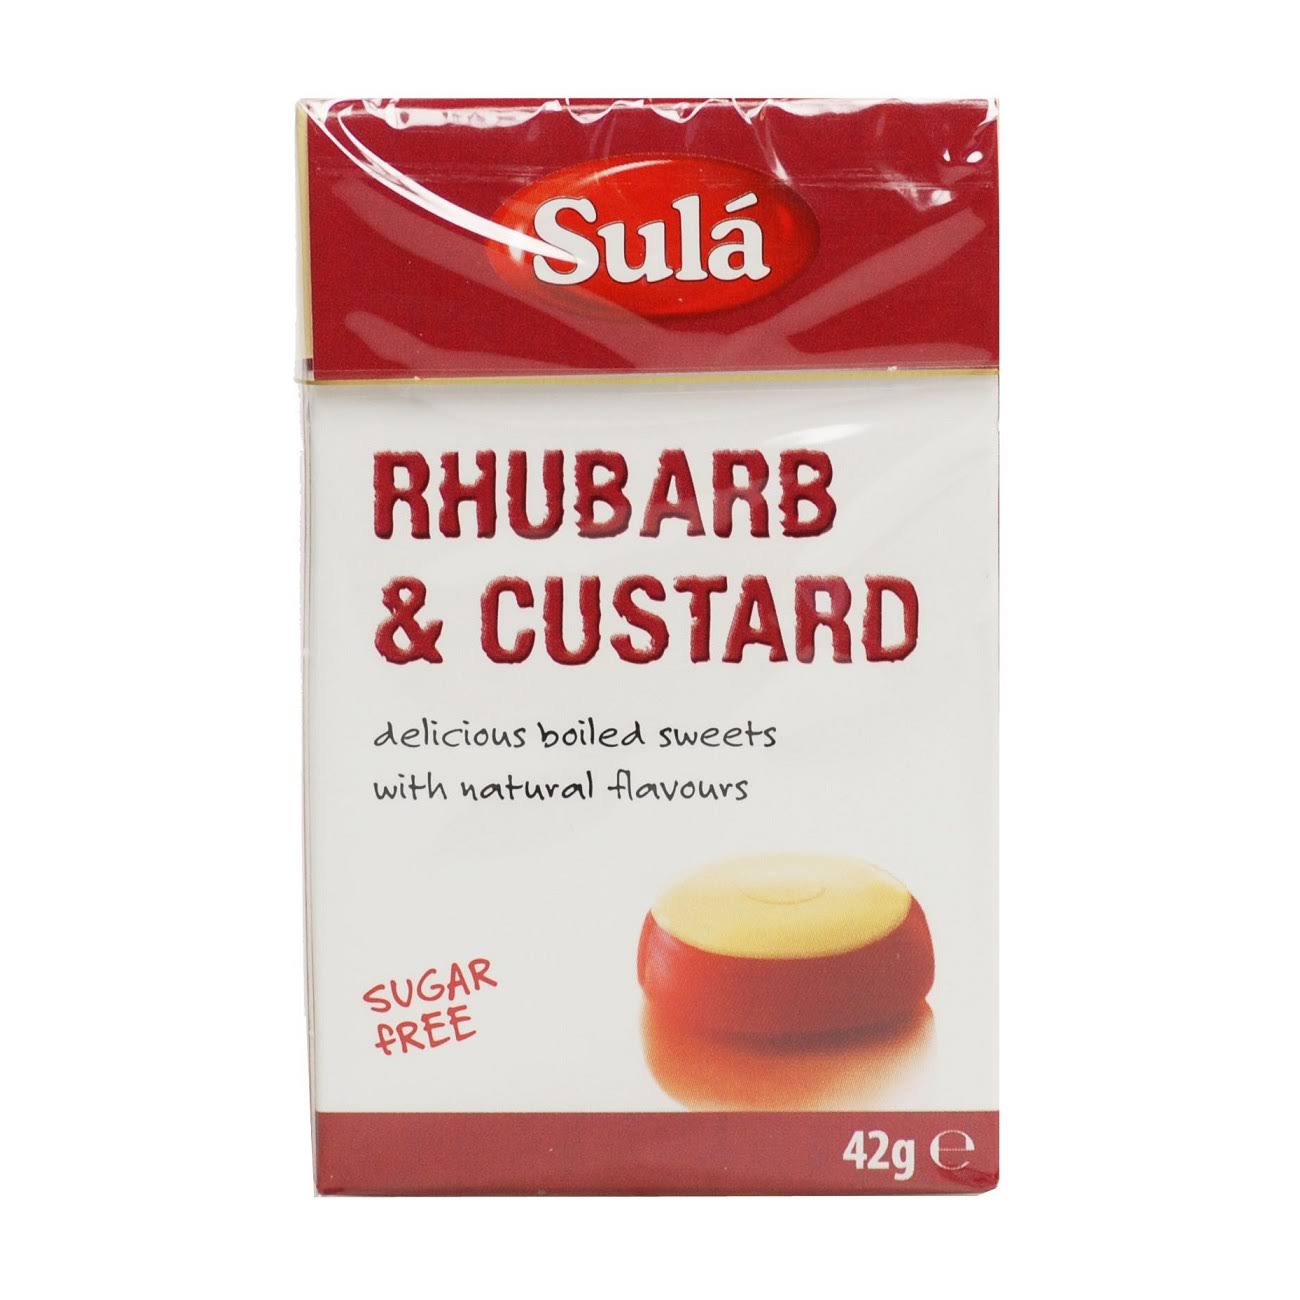 Sula Rhubarb & Custard Sugar Free Sweets 42g